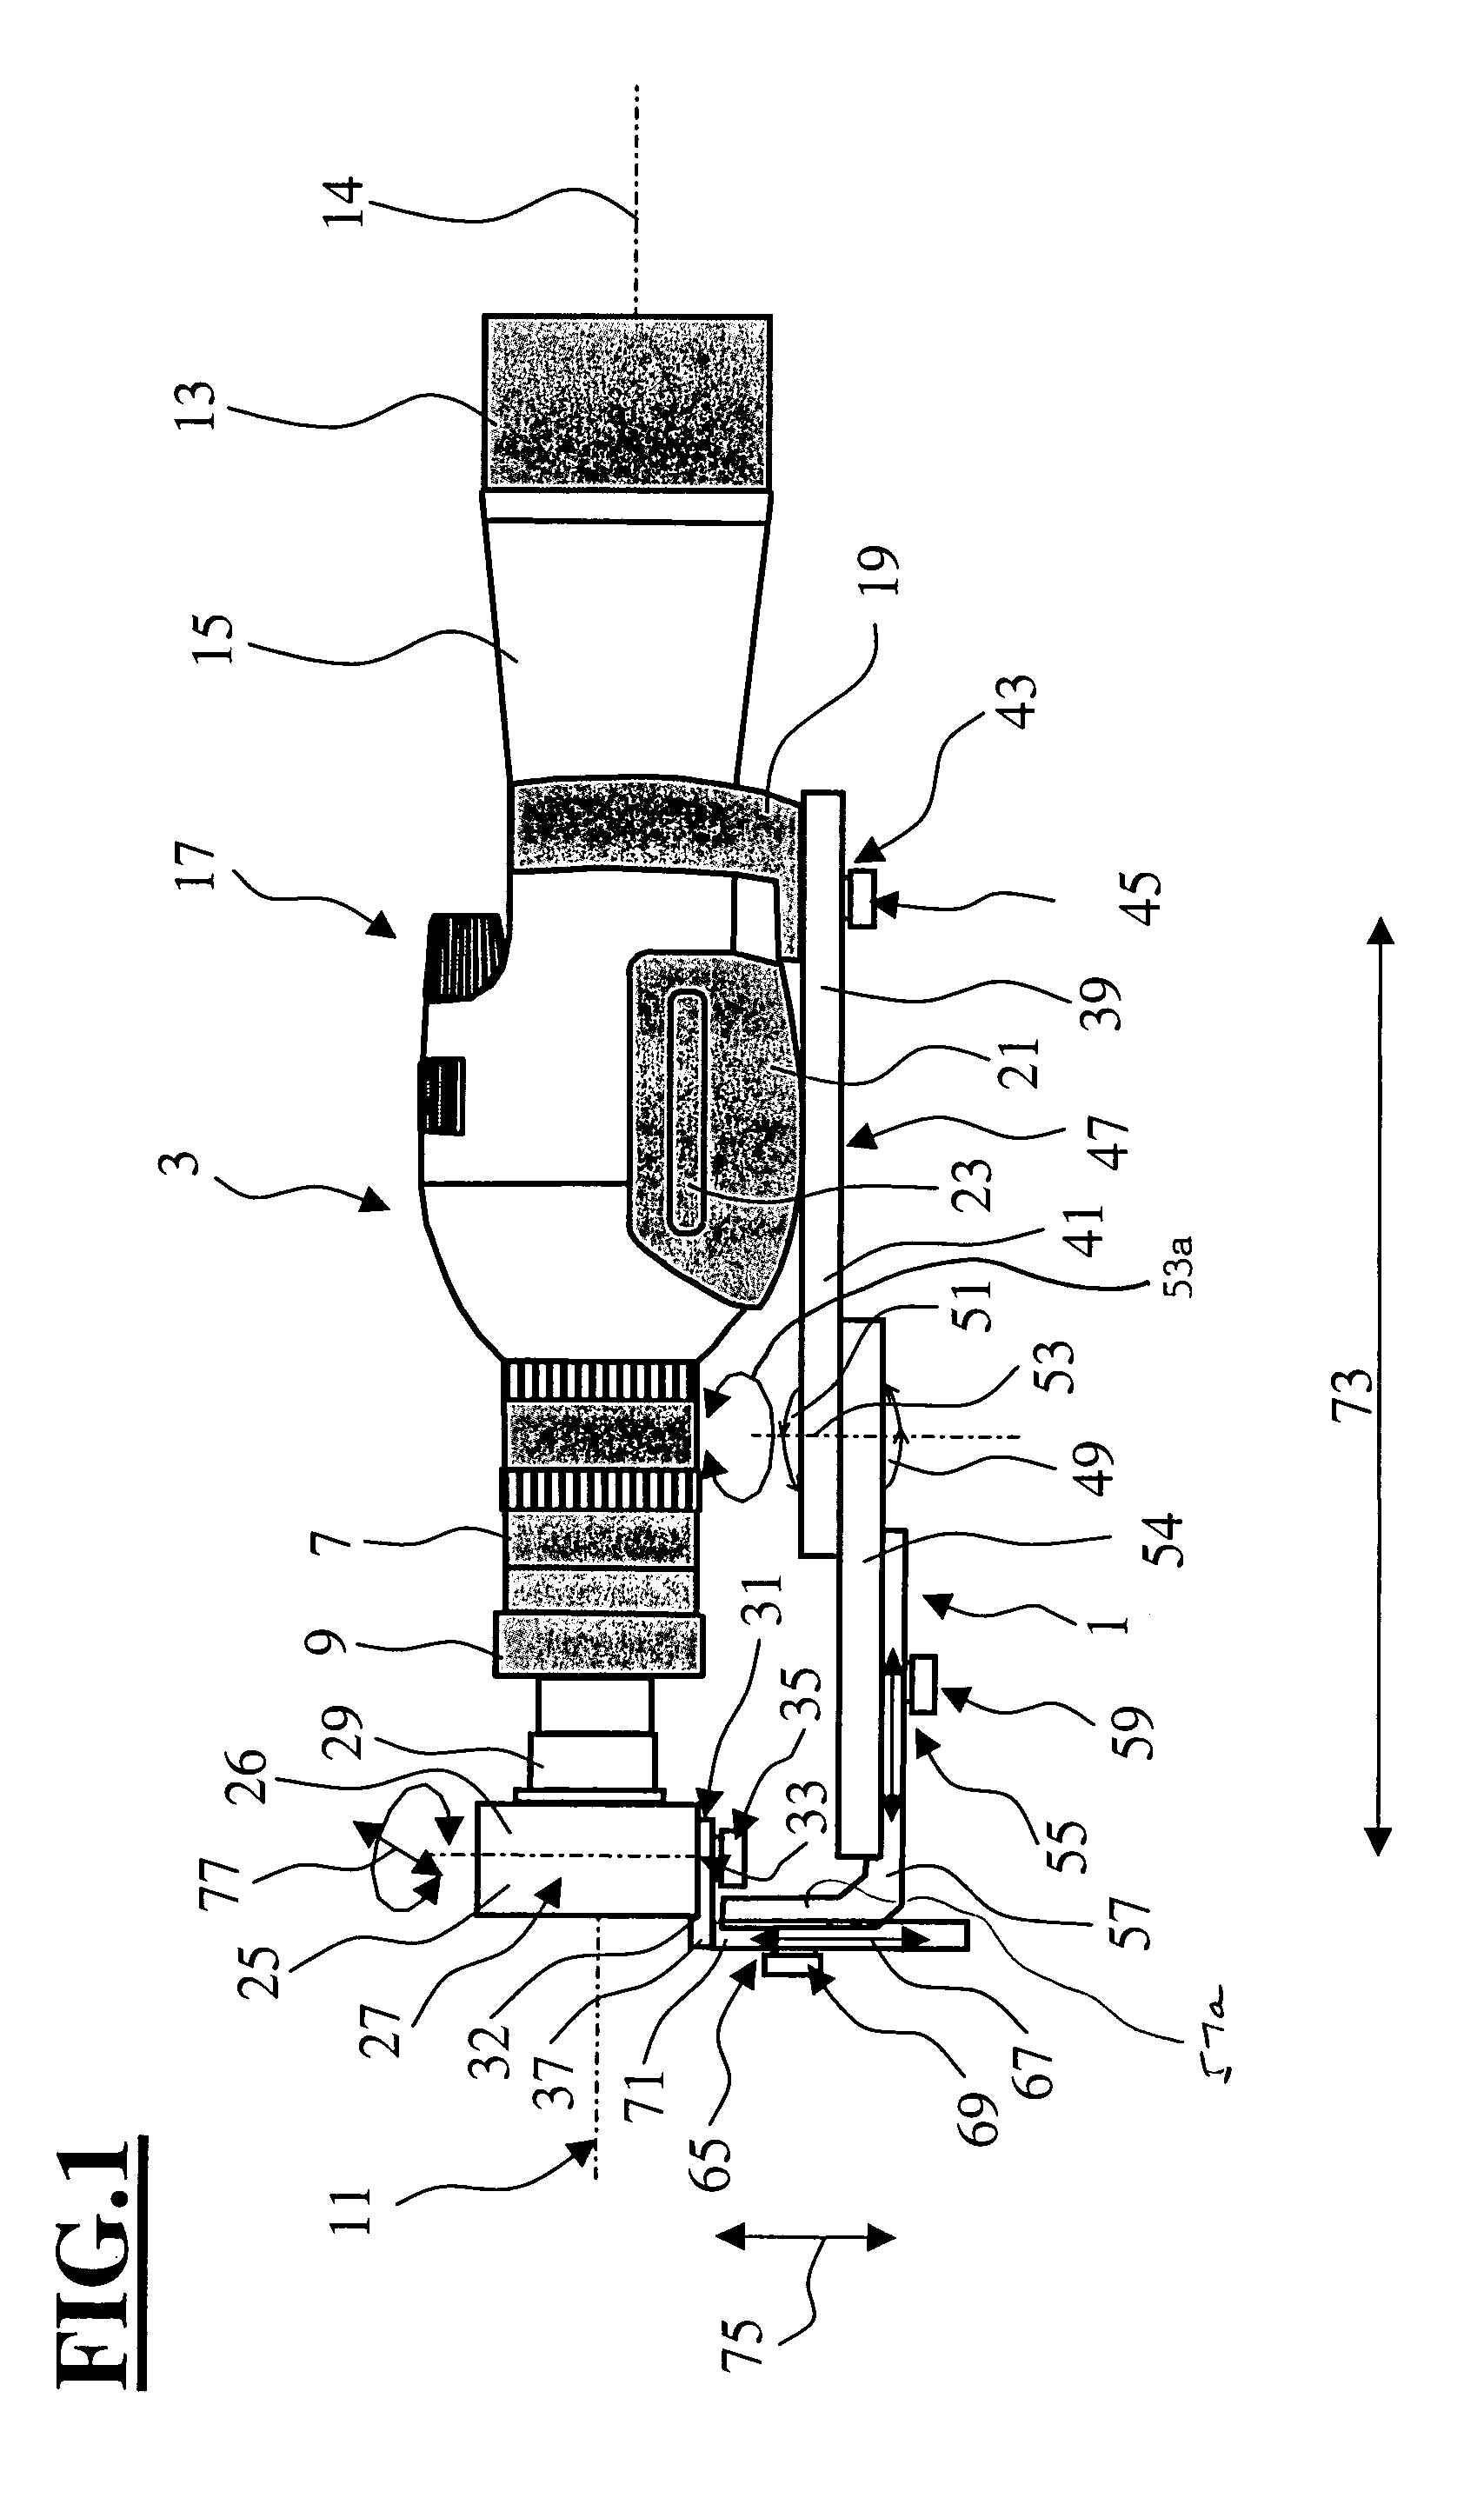 Arrangement for holding a camera behind a monocular or binocular